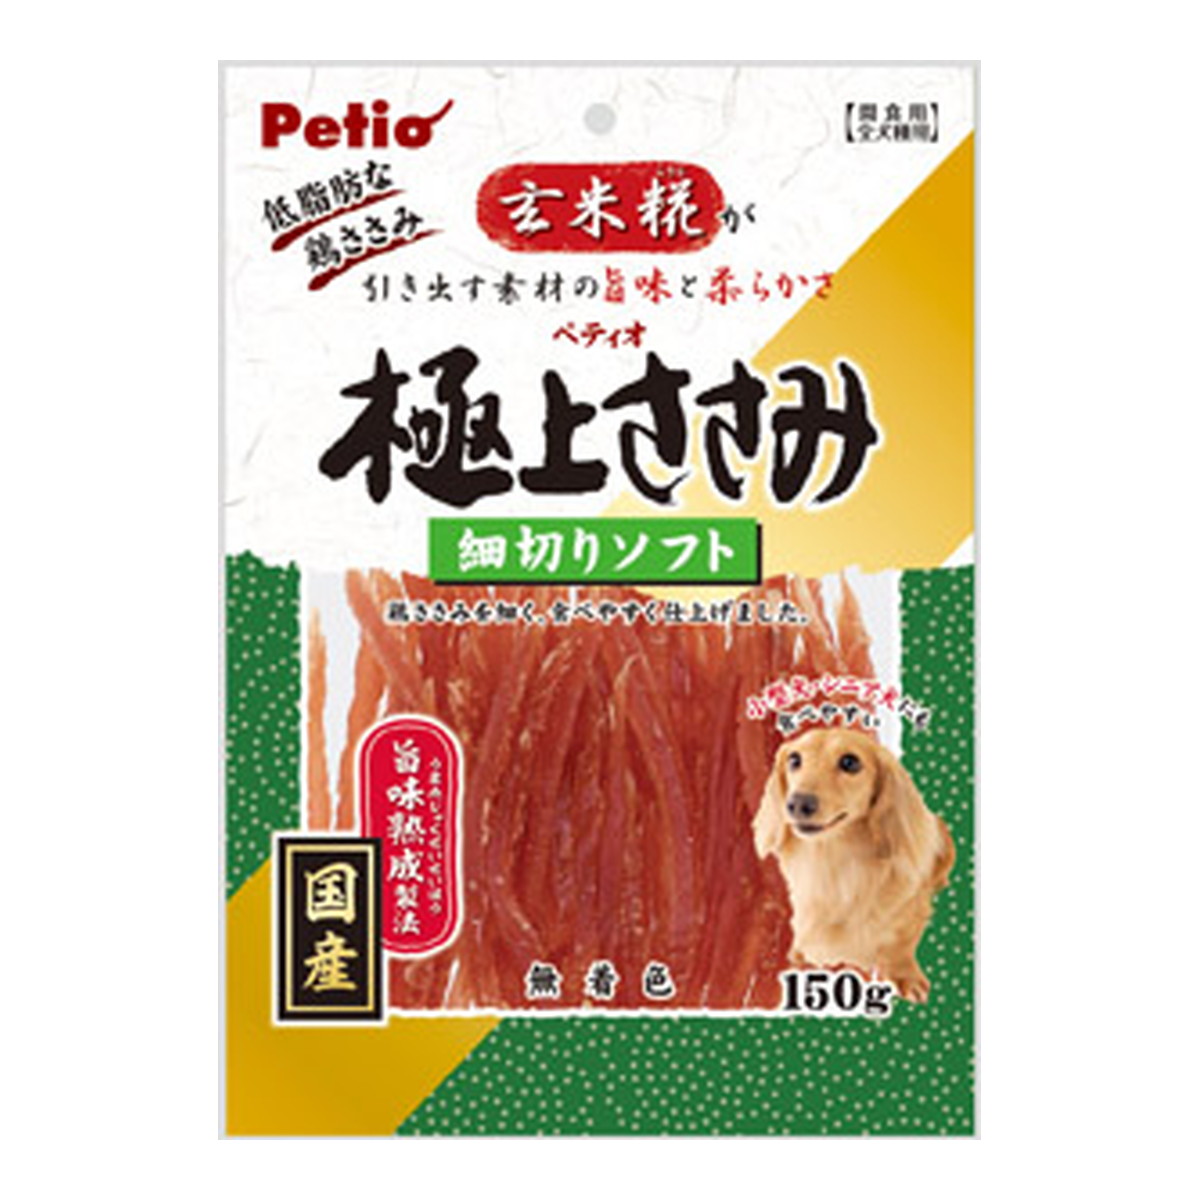 Petio ペティオ 極上ささみ 細切りソフト 150g×1個 犬用おやつ、ガムの商品画像